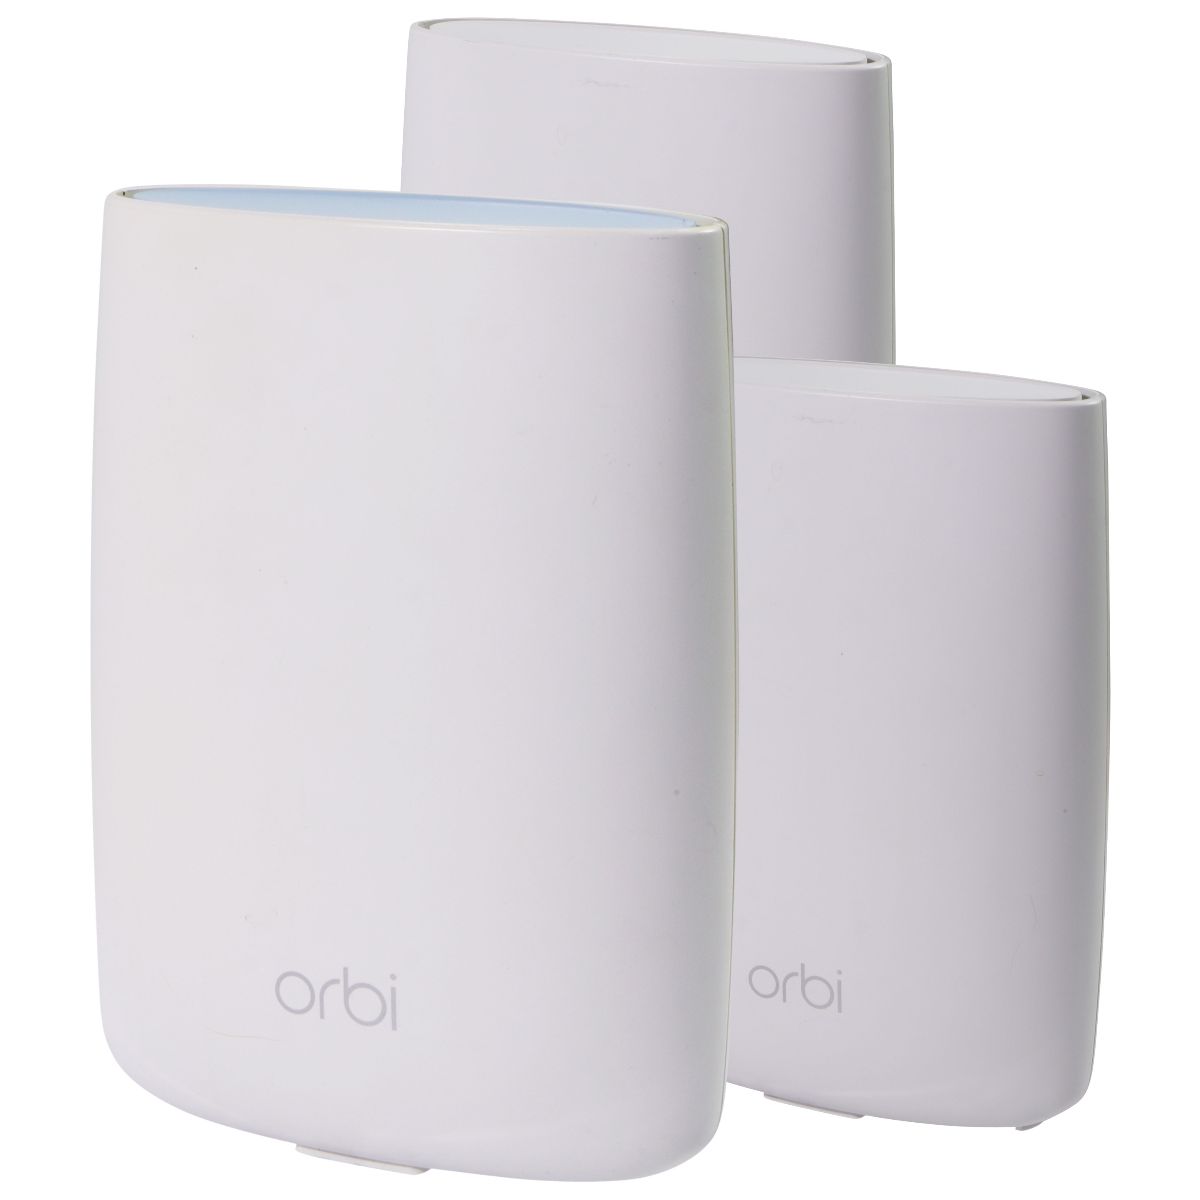 Netgear Orbi AC3000 Whole Home Tri-band WiFi System 1 Router & 2x Satellites